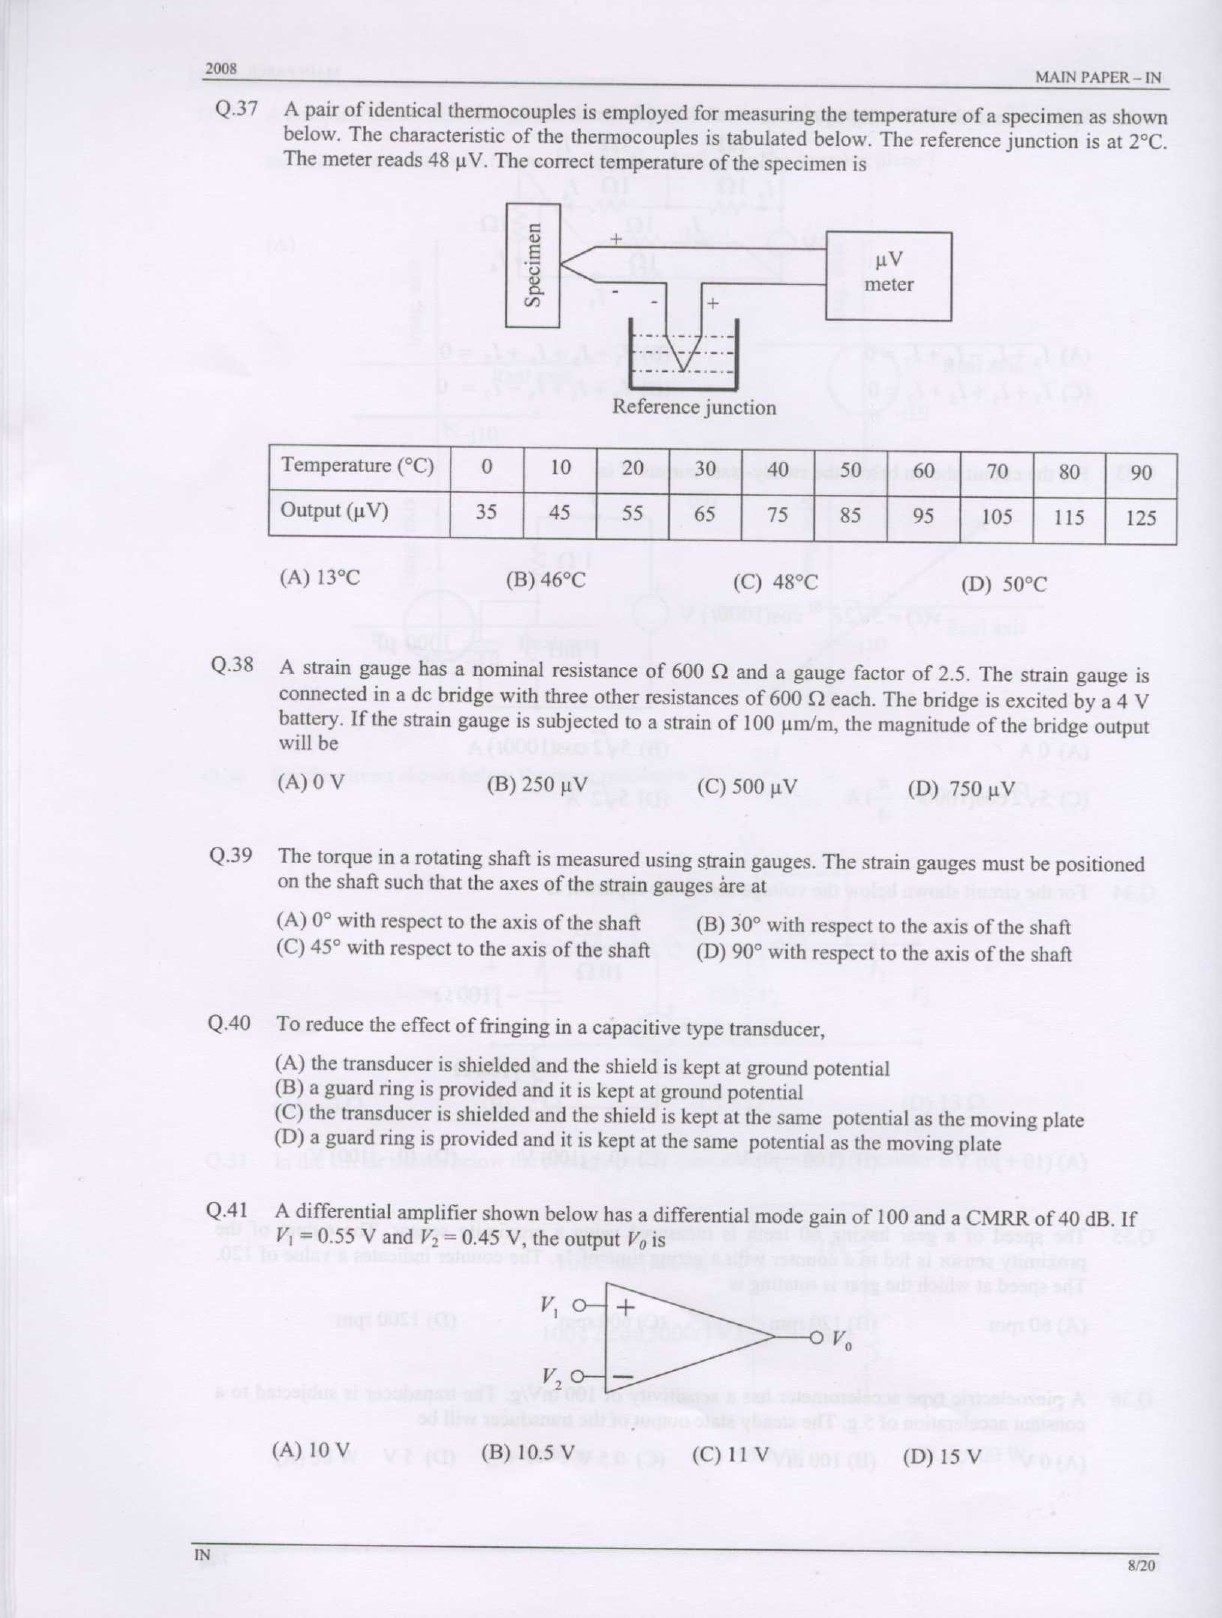 GATE Exam Question Paper 2008 Instrumentation Engineering 8